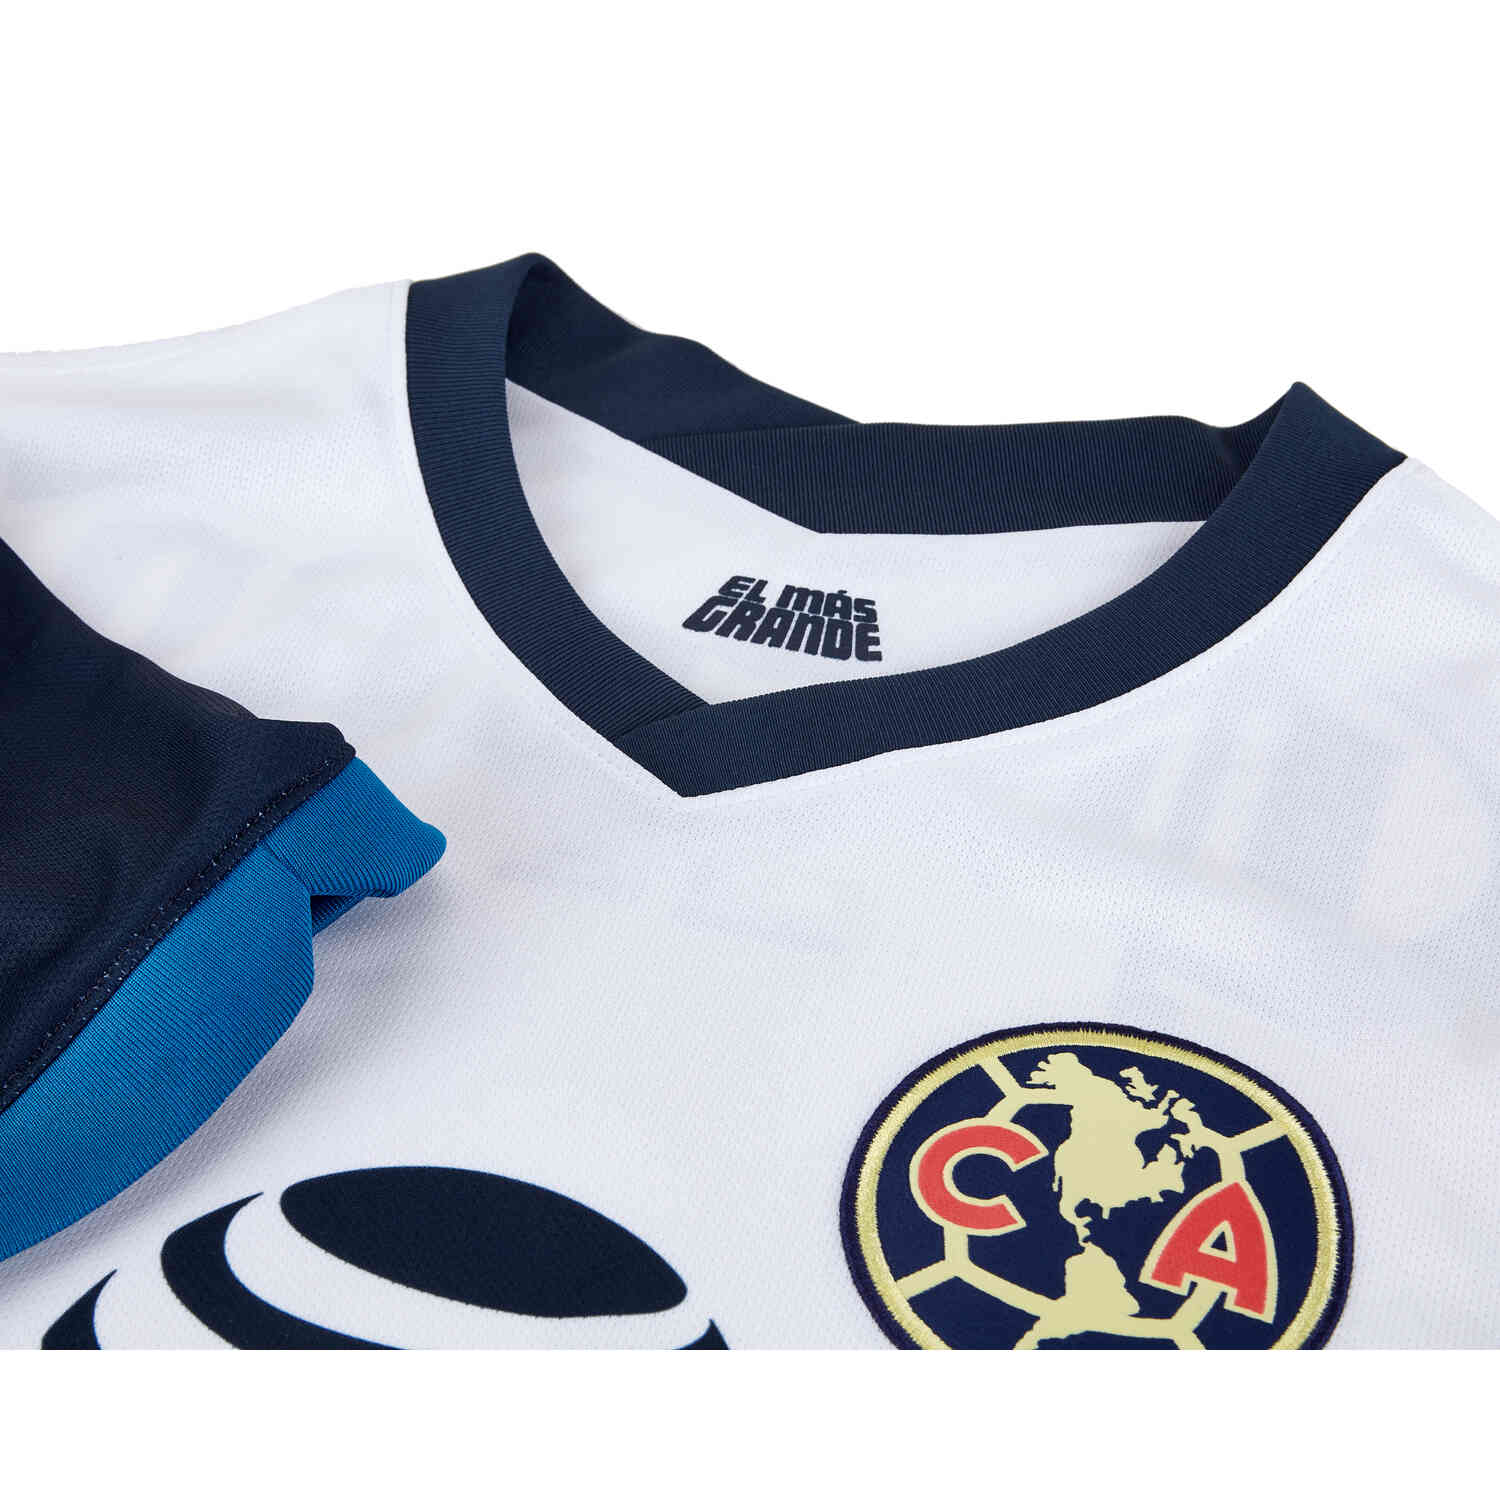 New 2020-2021 Club America Home/Away Soccer Jersey Long Sleeves Shirt S-XXL 